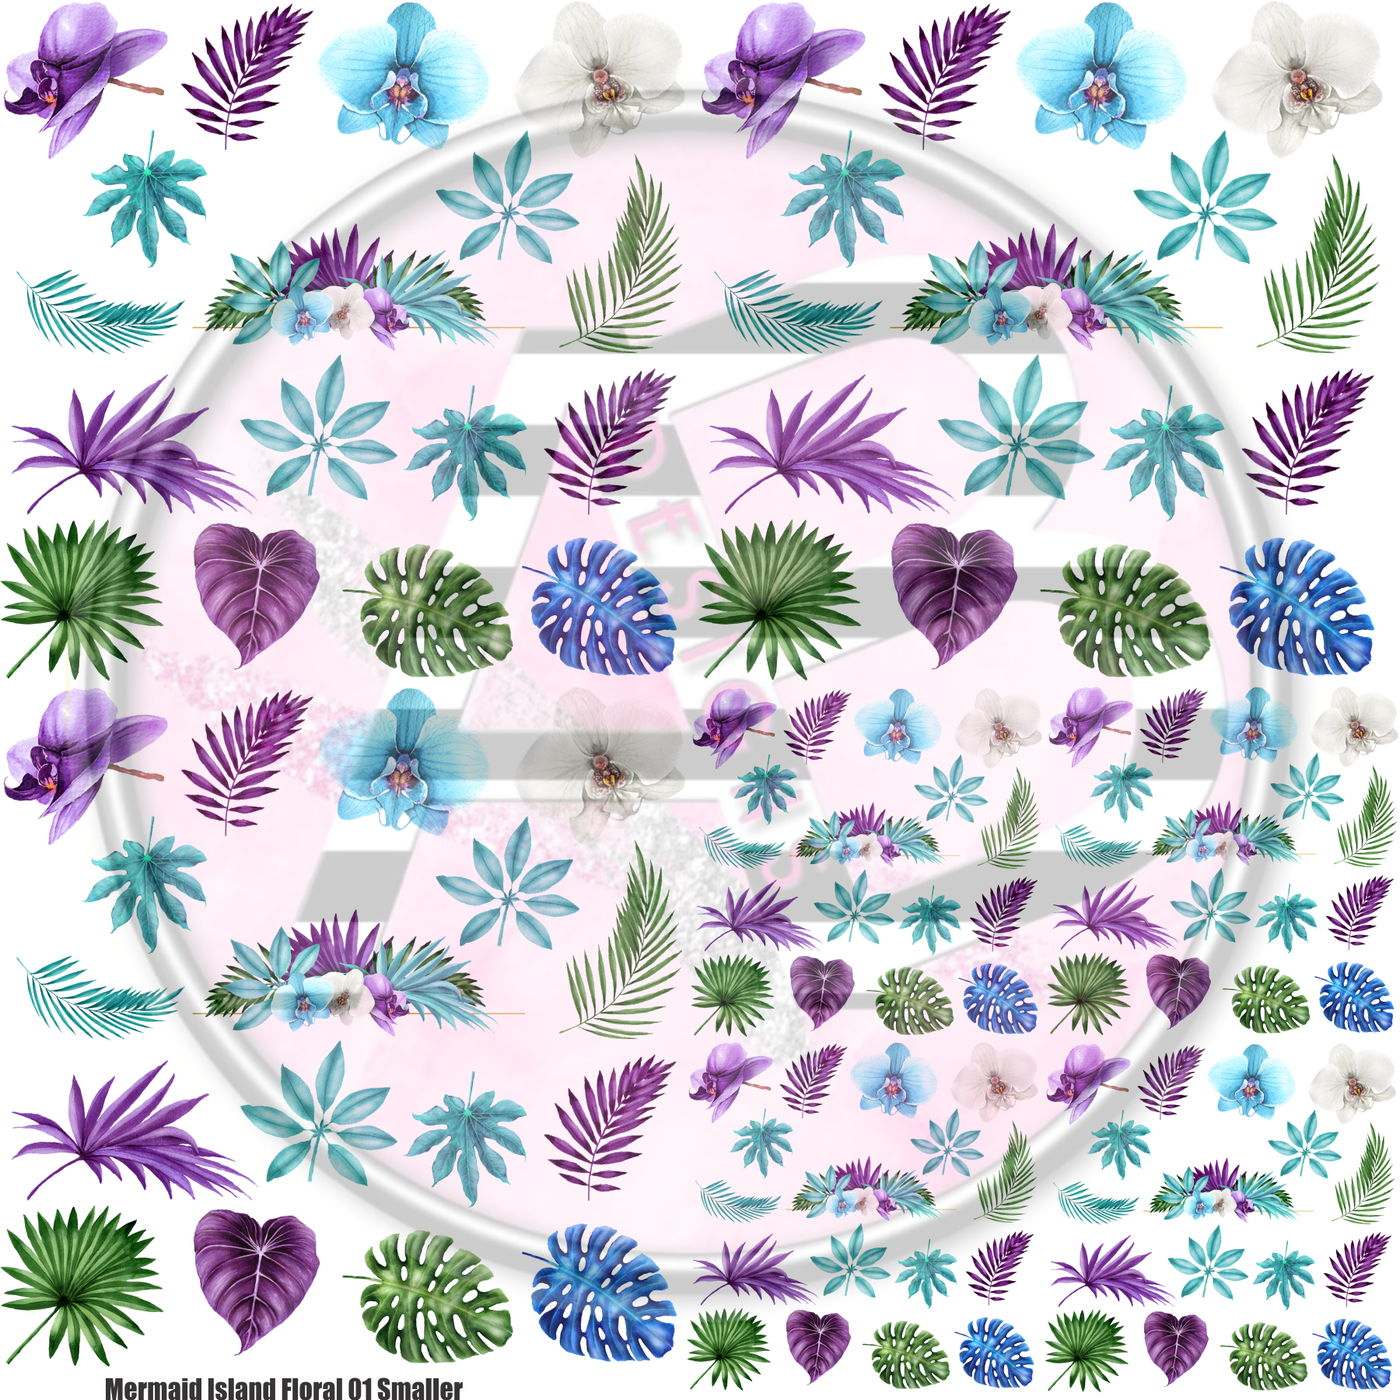 Mermaid Island Floral 01 Smaller Full Sheet 12x12 - Clear Sheet